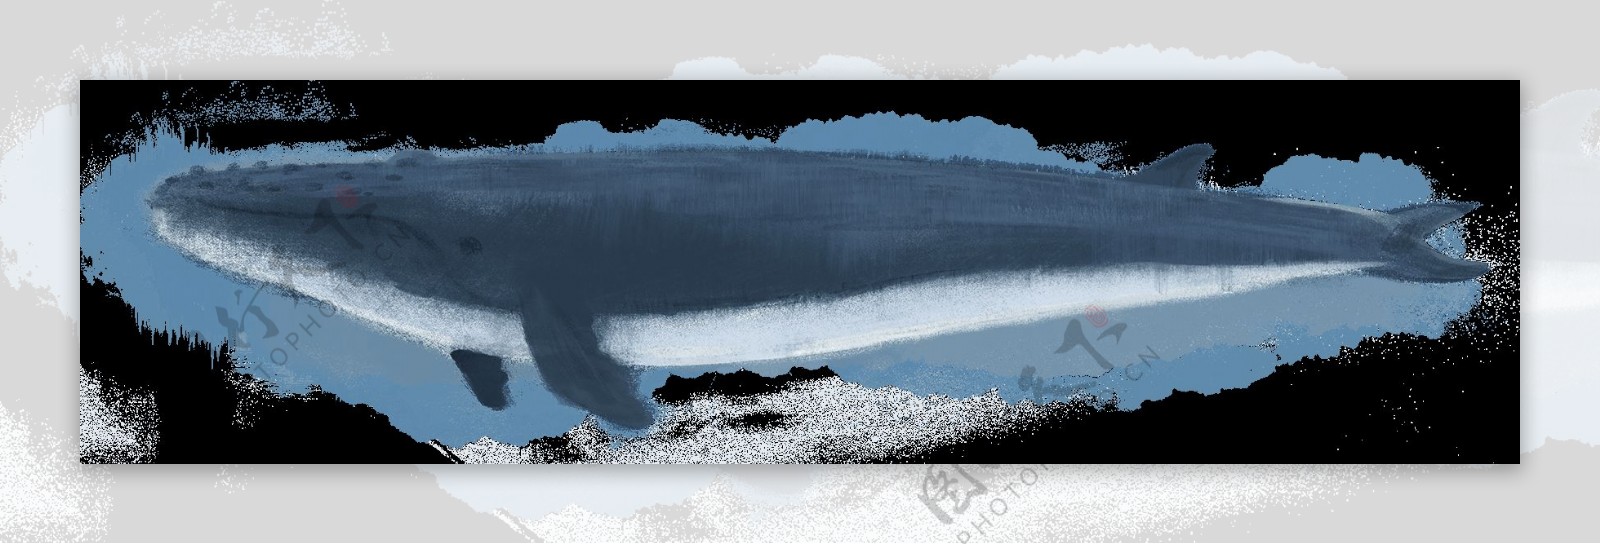 蓝色大鲸鱼png元素